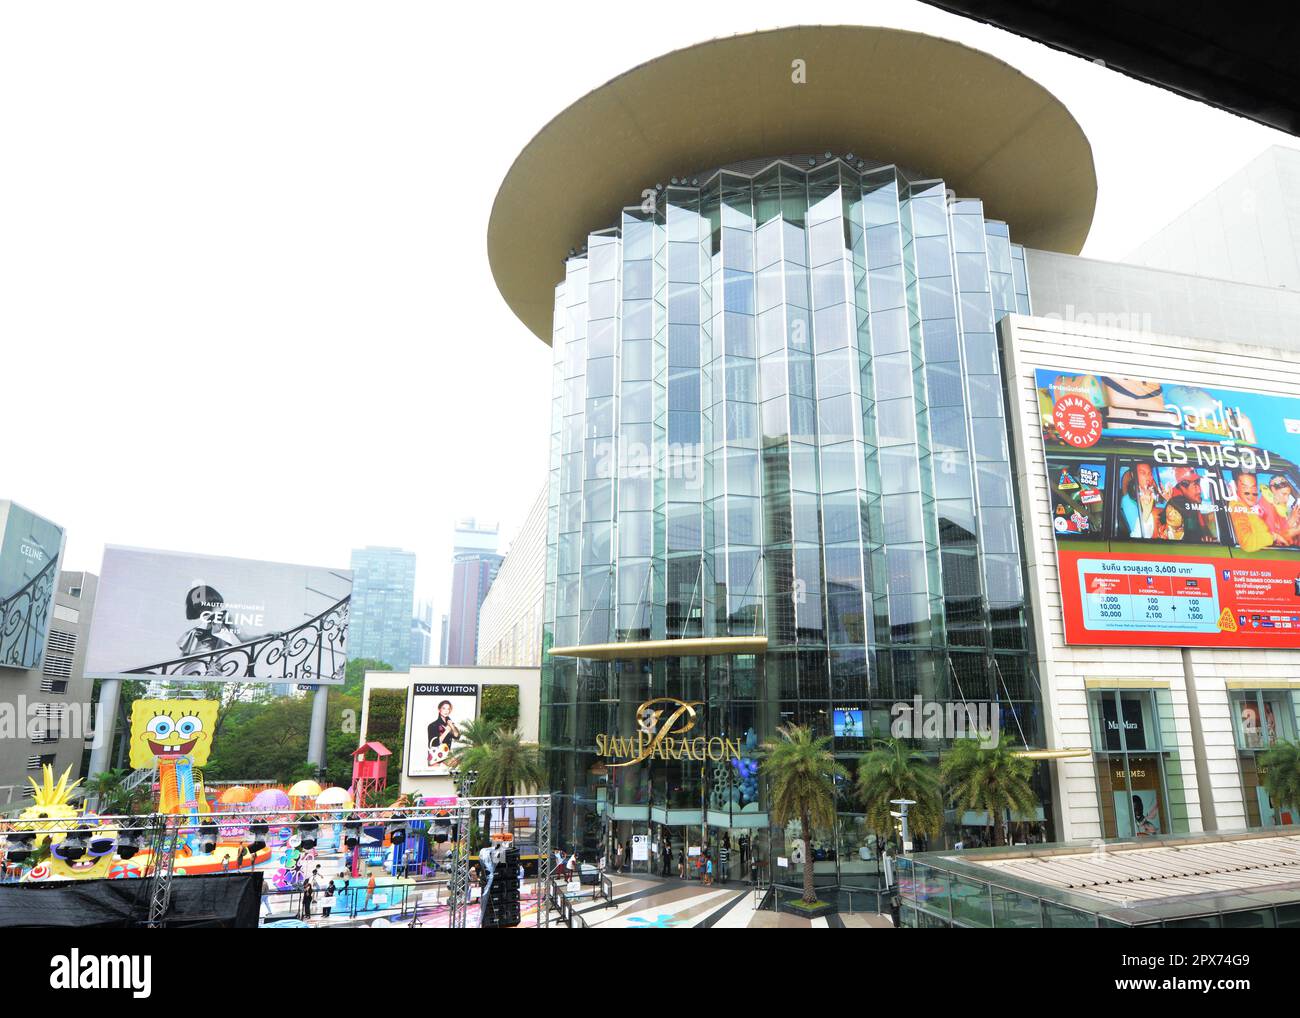 4K] Walk inside Siam Paragon huge shopping mall in Bangkok 